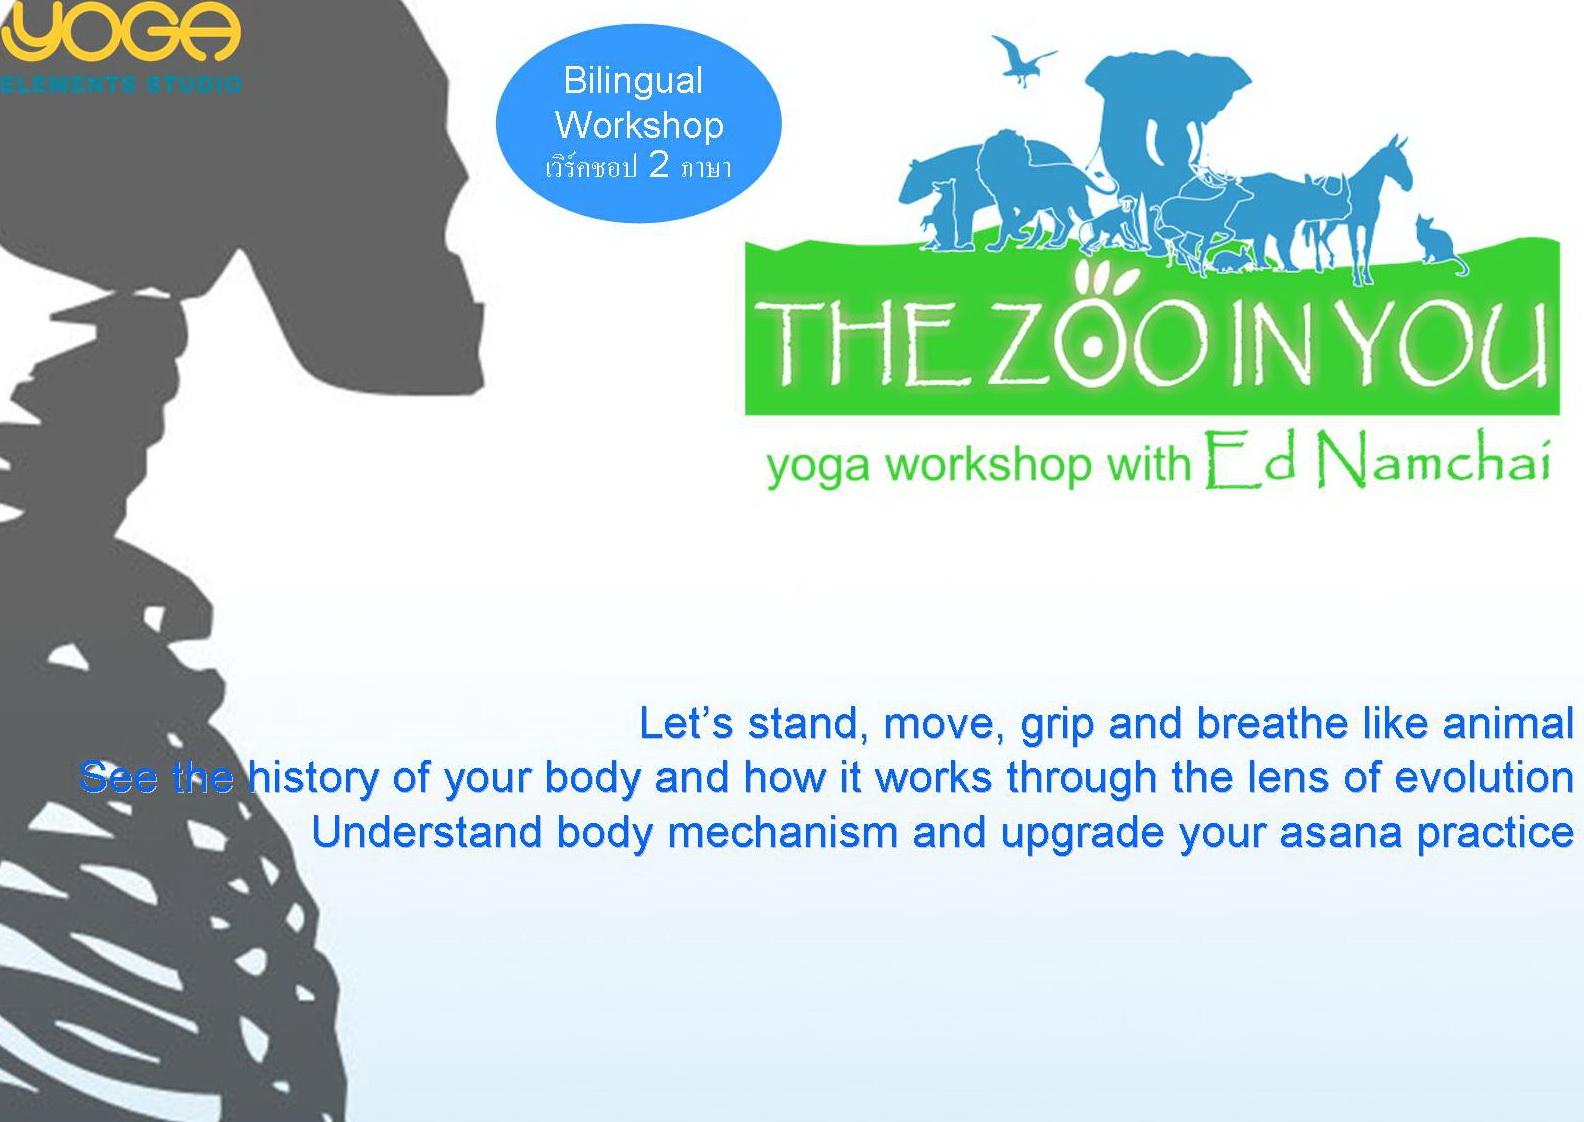 The Zoo in You Yoga Workshop with Ed Namchai in Bangkok, Thailand